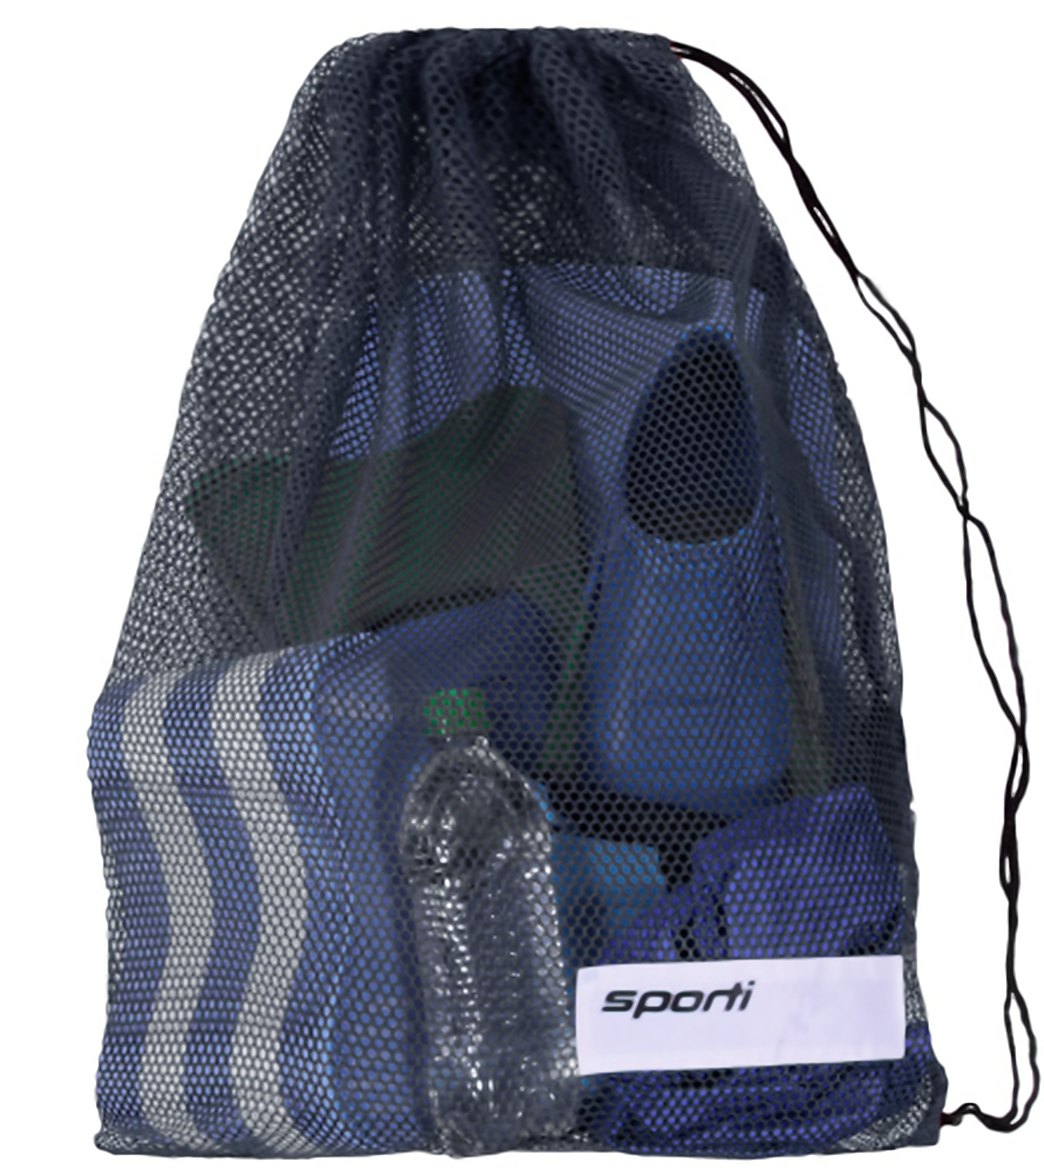 Sporti Mesh Bag - Navy Polyester - Swimoutlet.com